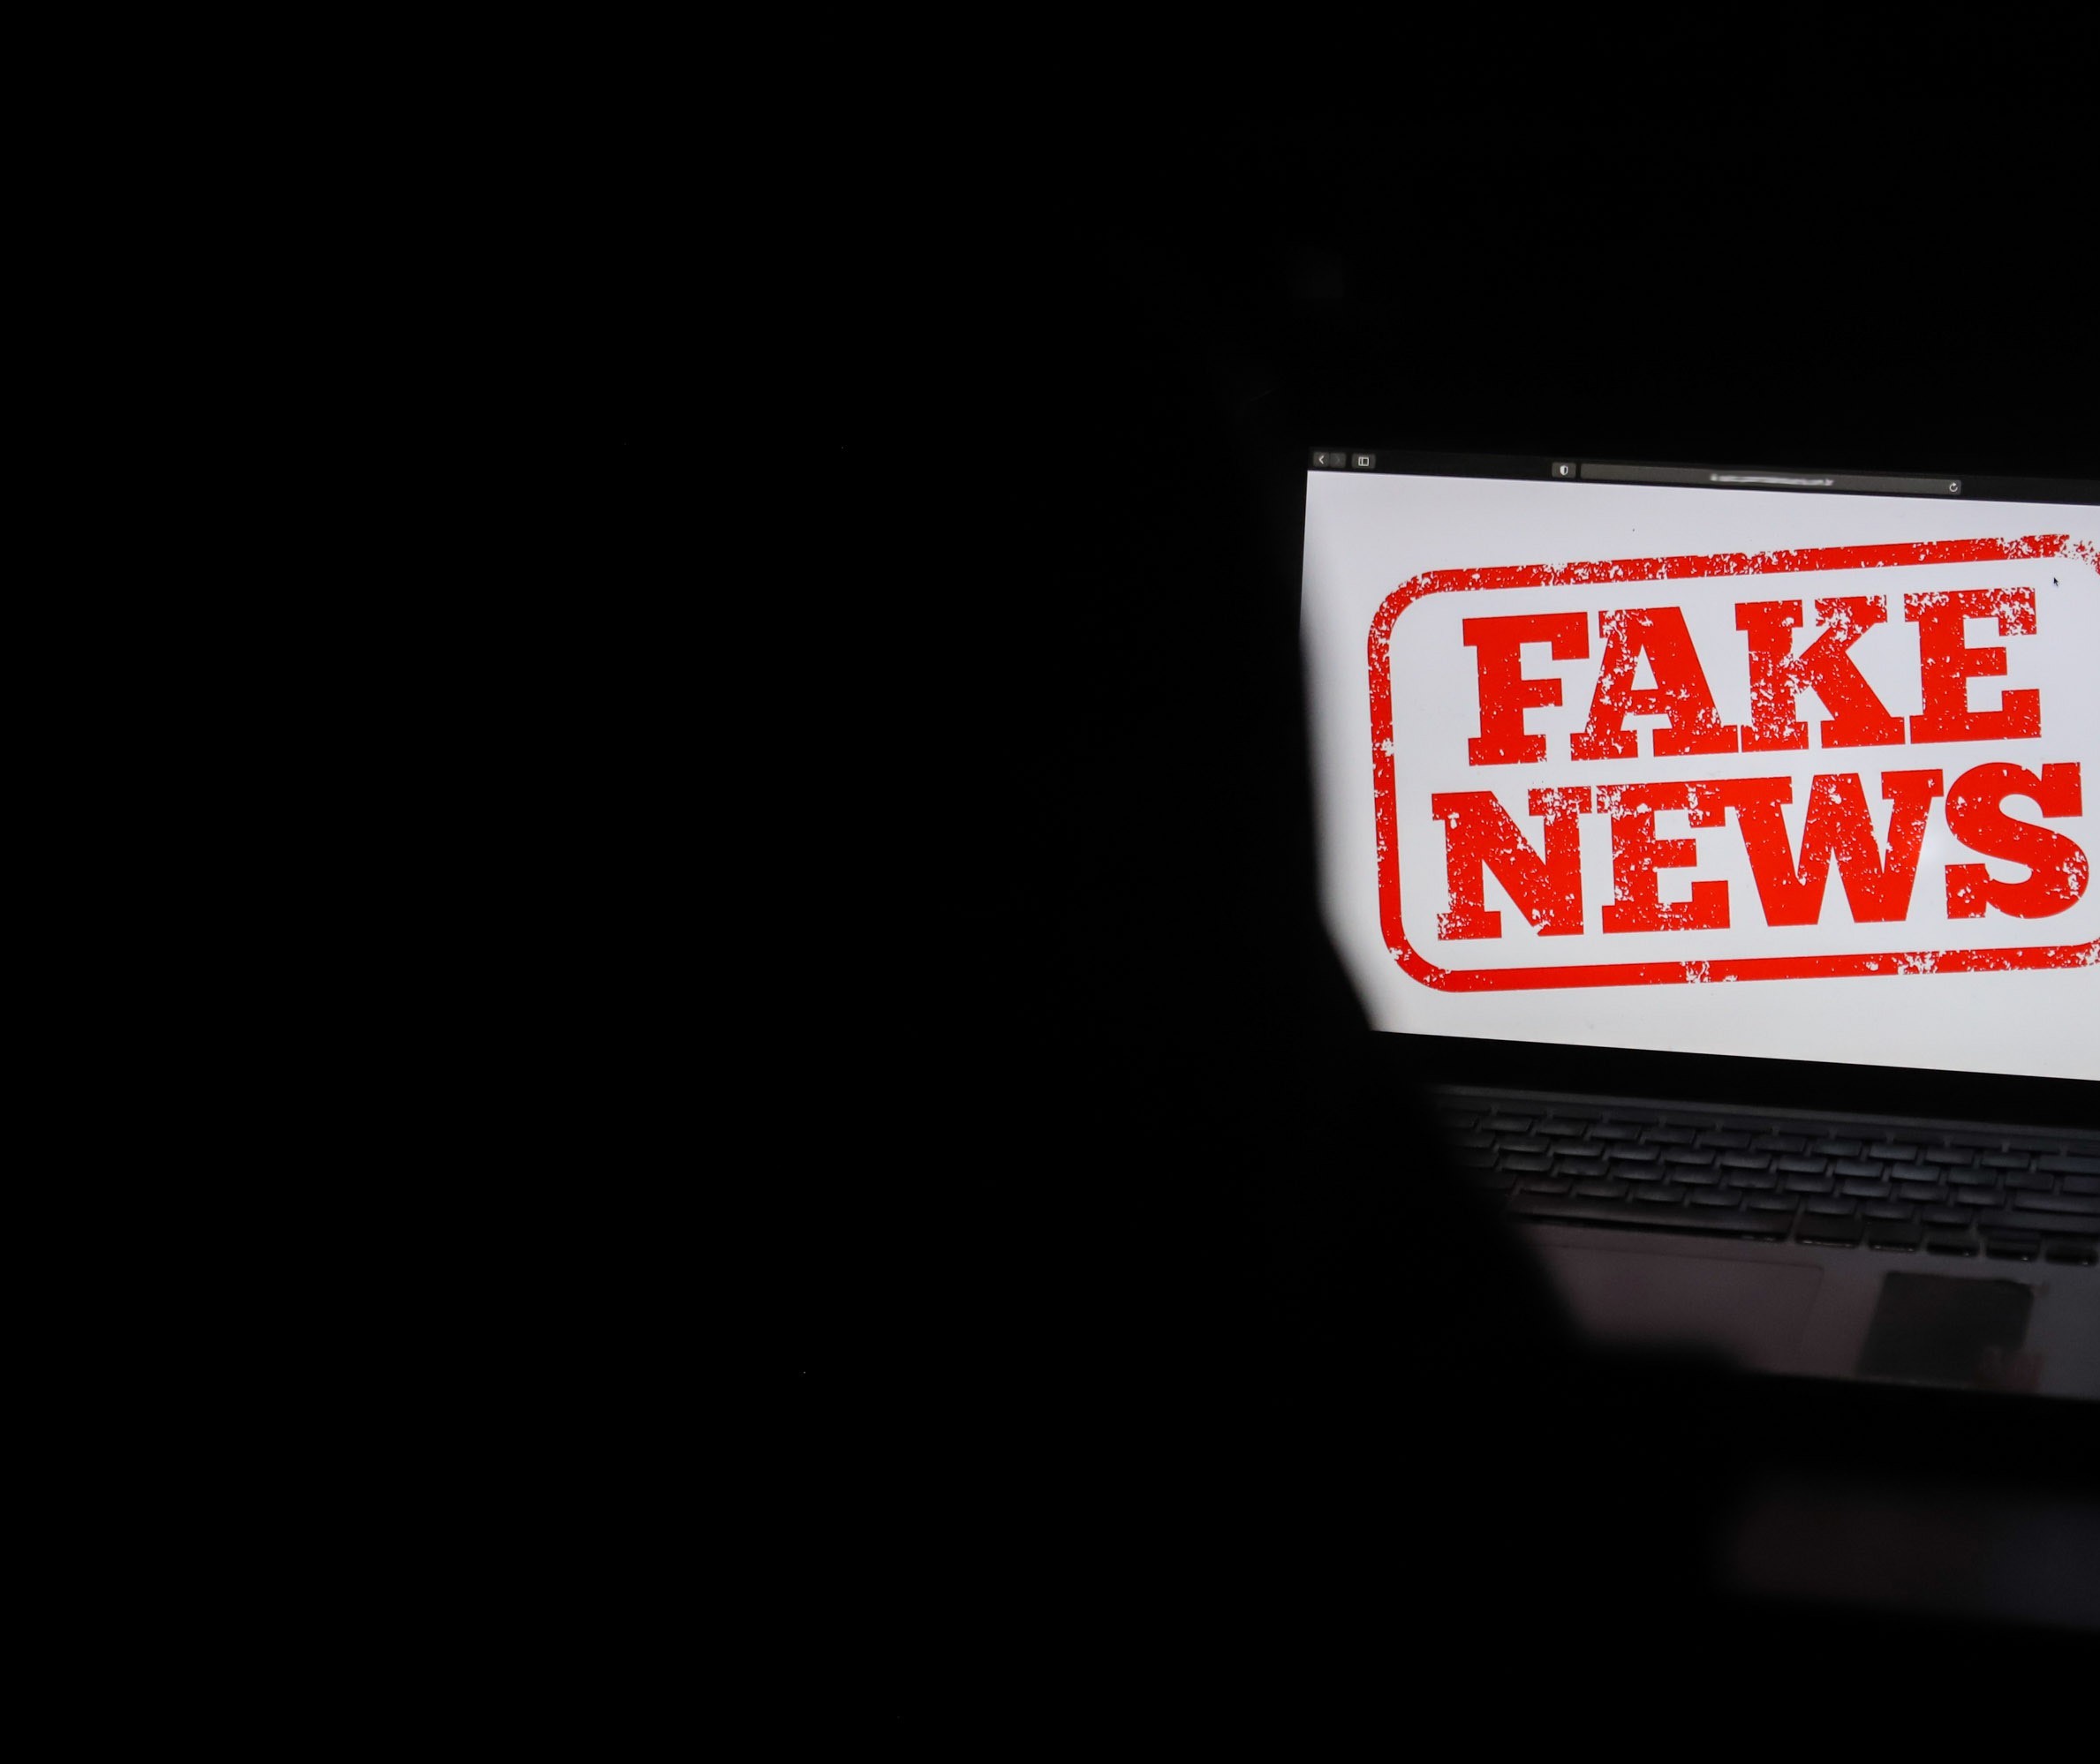 Lei das Fake News pode ser "fake"